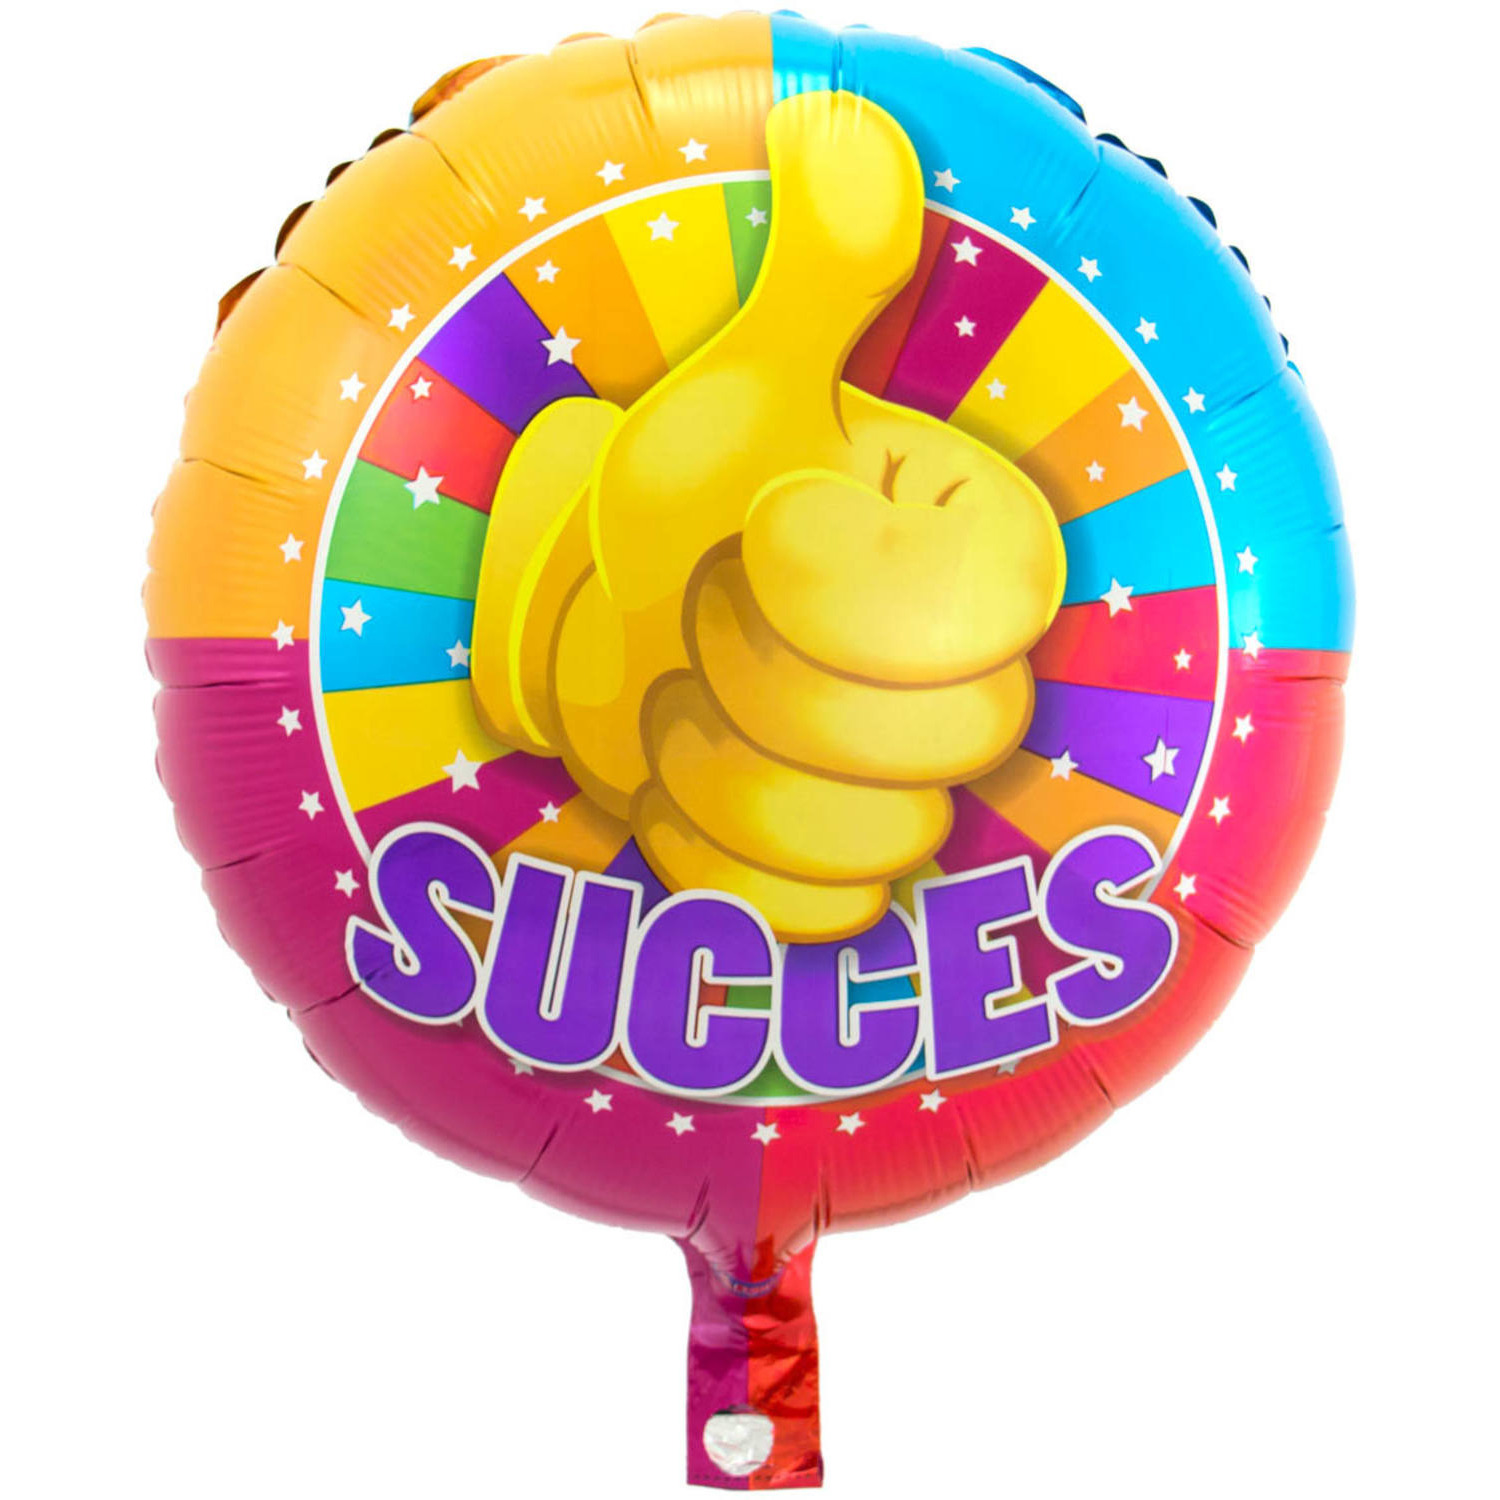 Folie ballon Succes 43 cm met helium gevuld